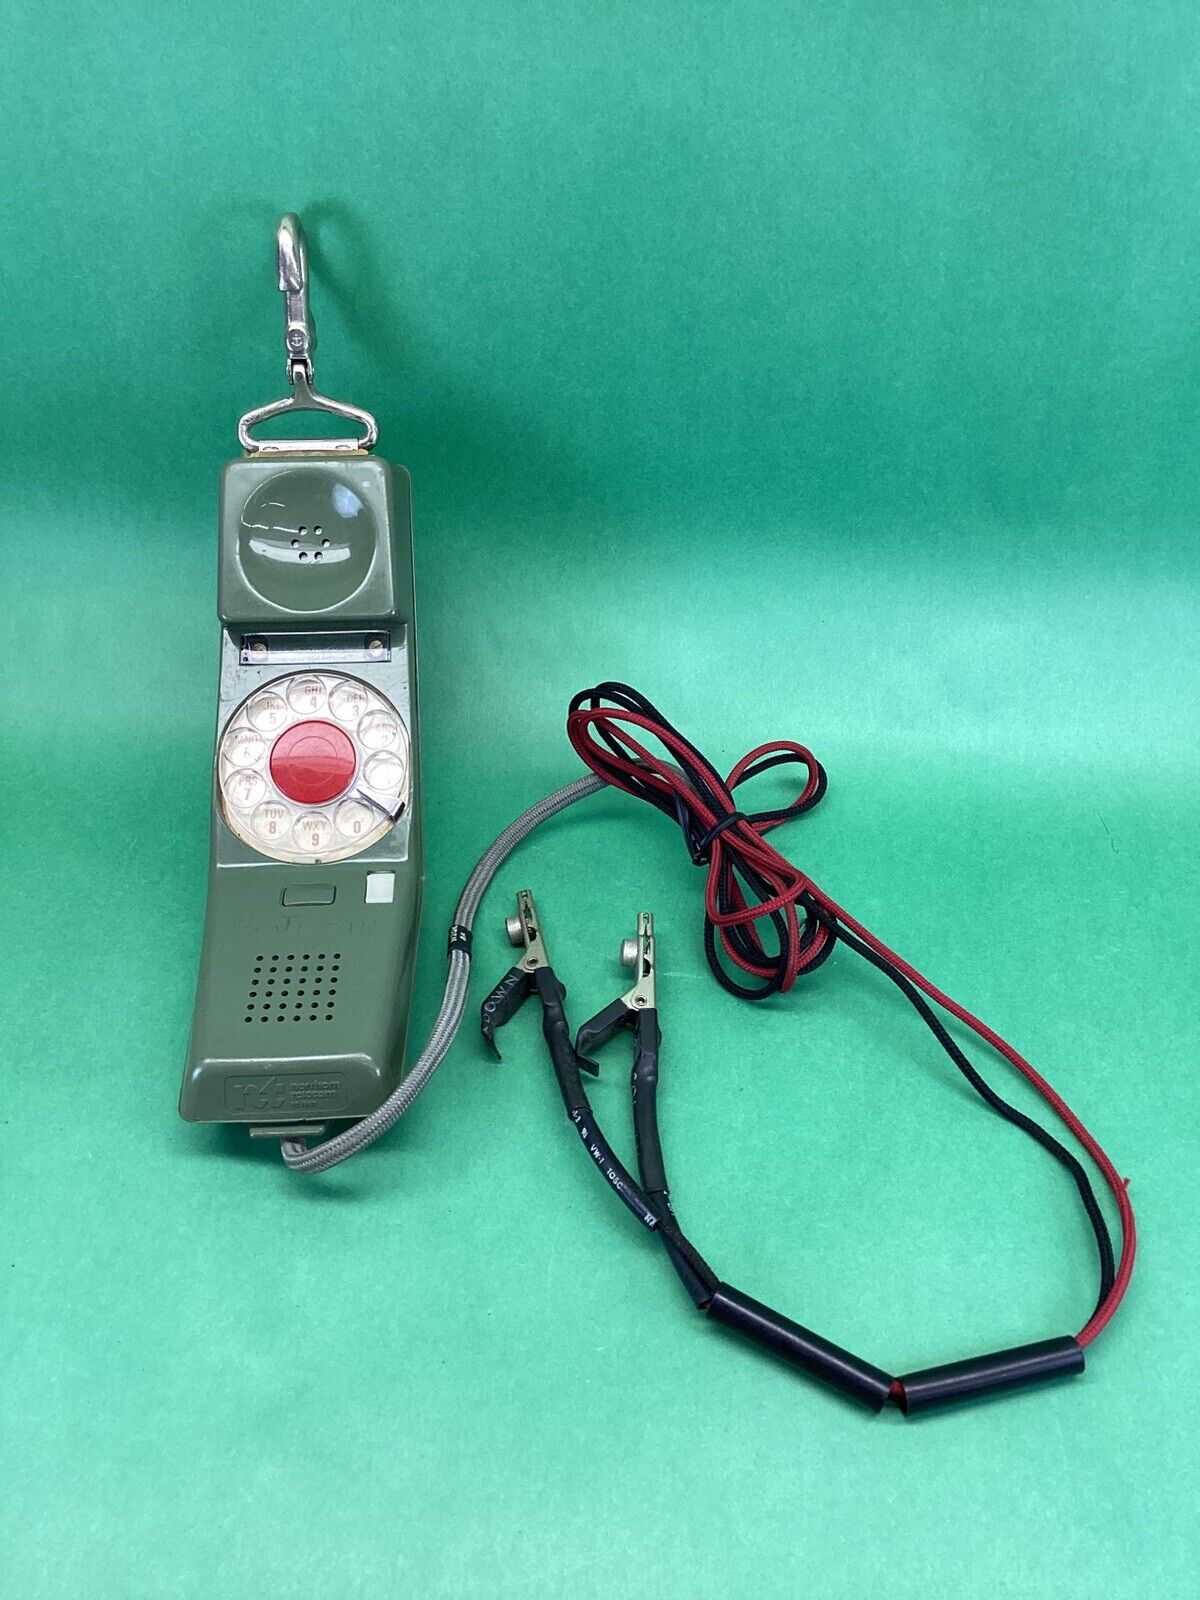 Northern Telecom RD1967 Rotary Dial Telephone Lineman\'s Butt Set Test Phone